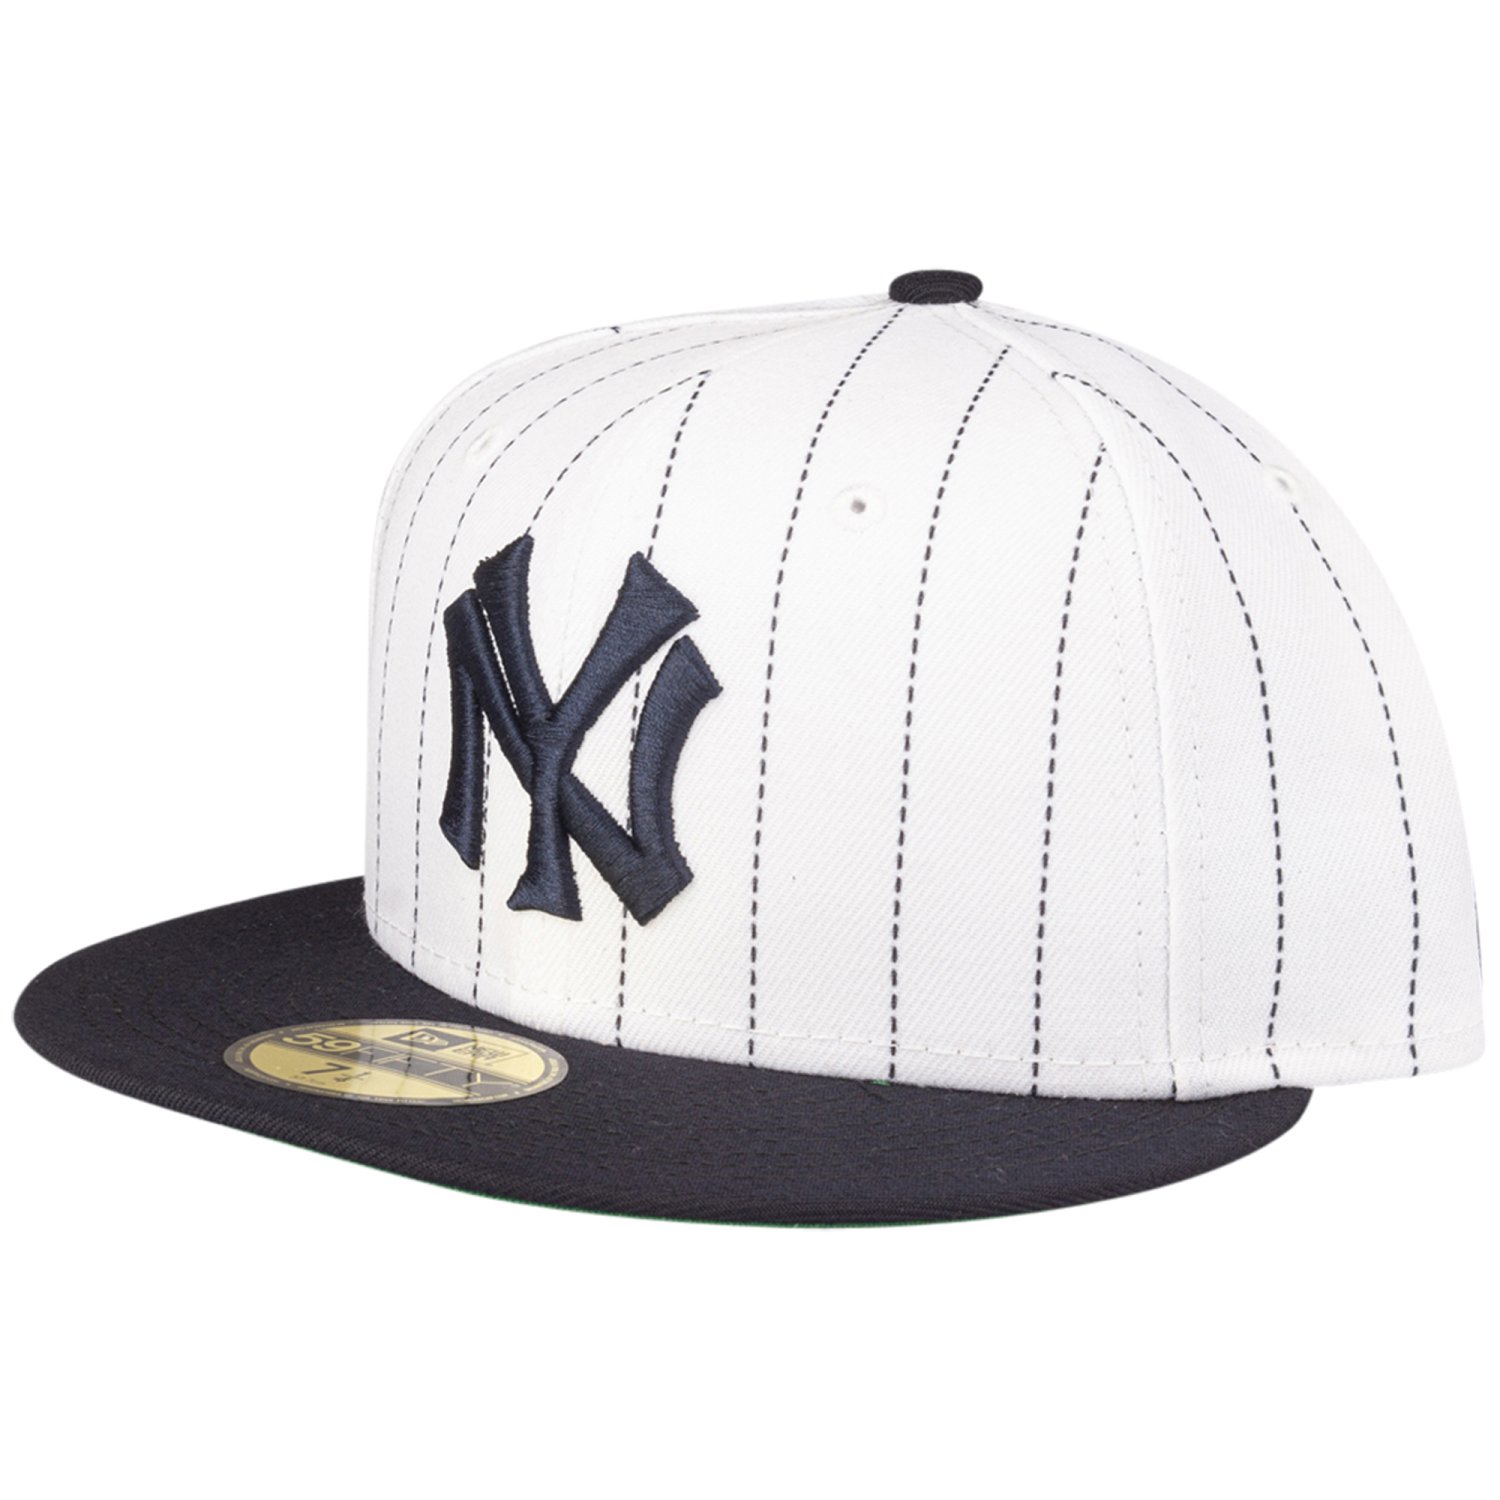 Shop New Era New York Yankees Throwback Pinstripe Tee 60334743